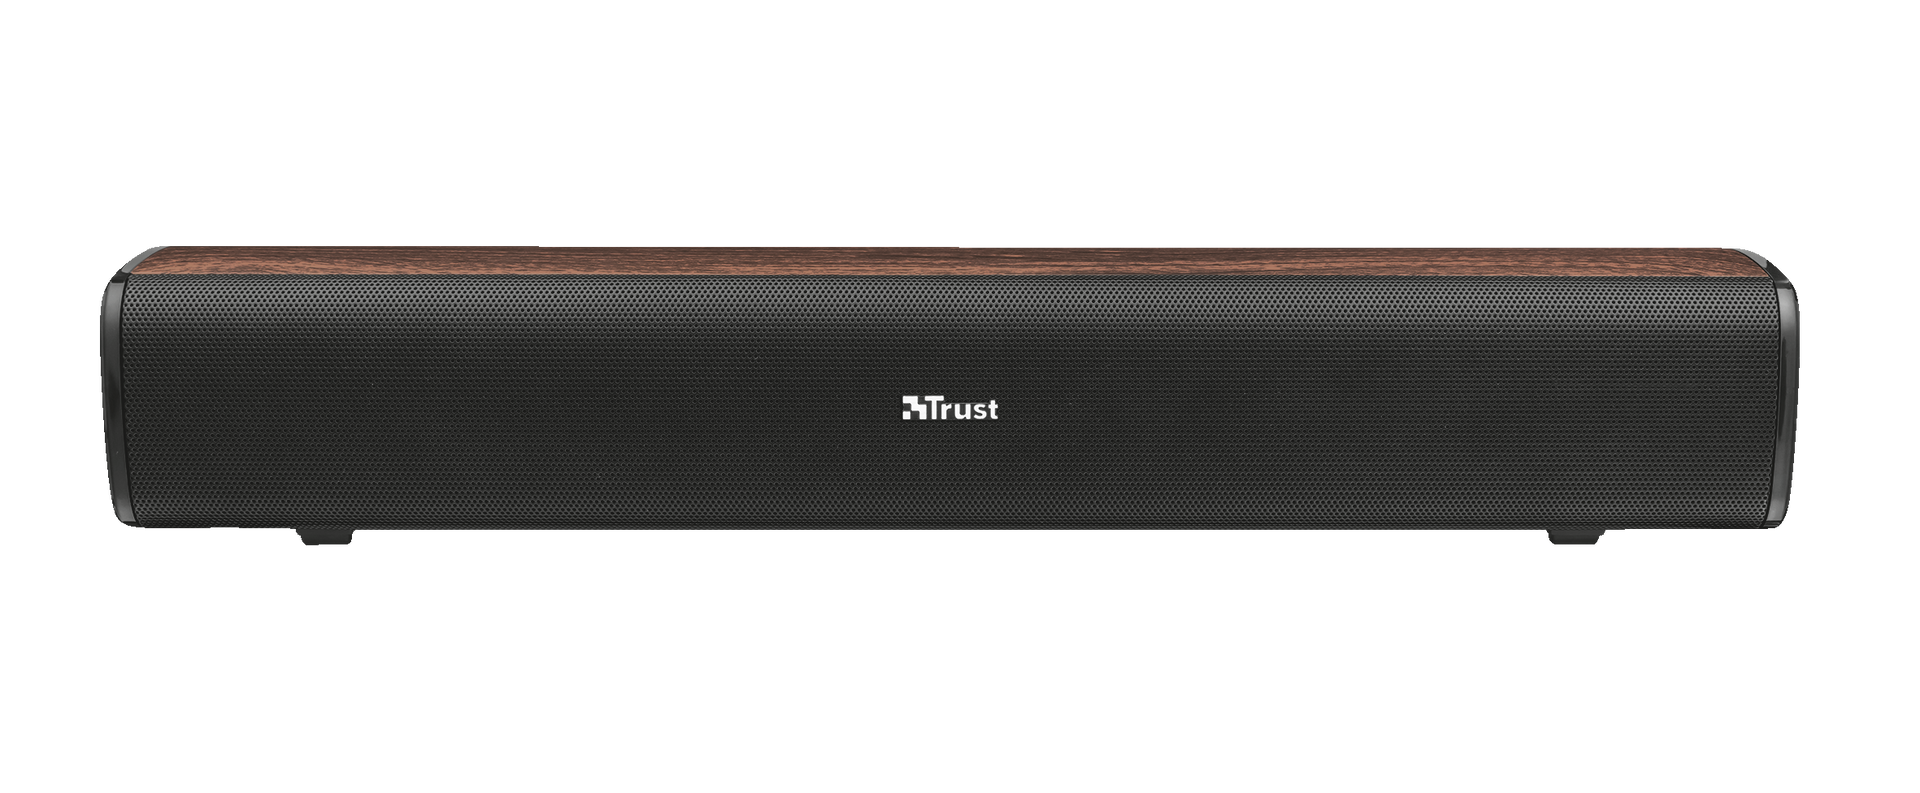 Vigor Wireless Soundbar with Bluetooth - brown-Front